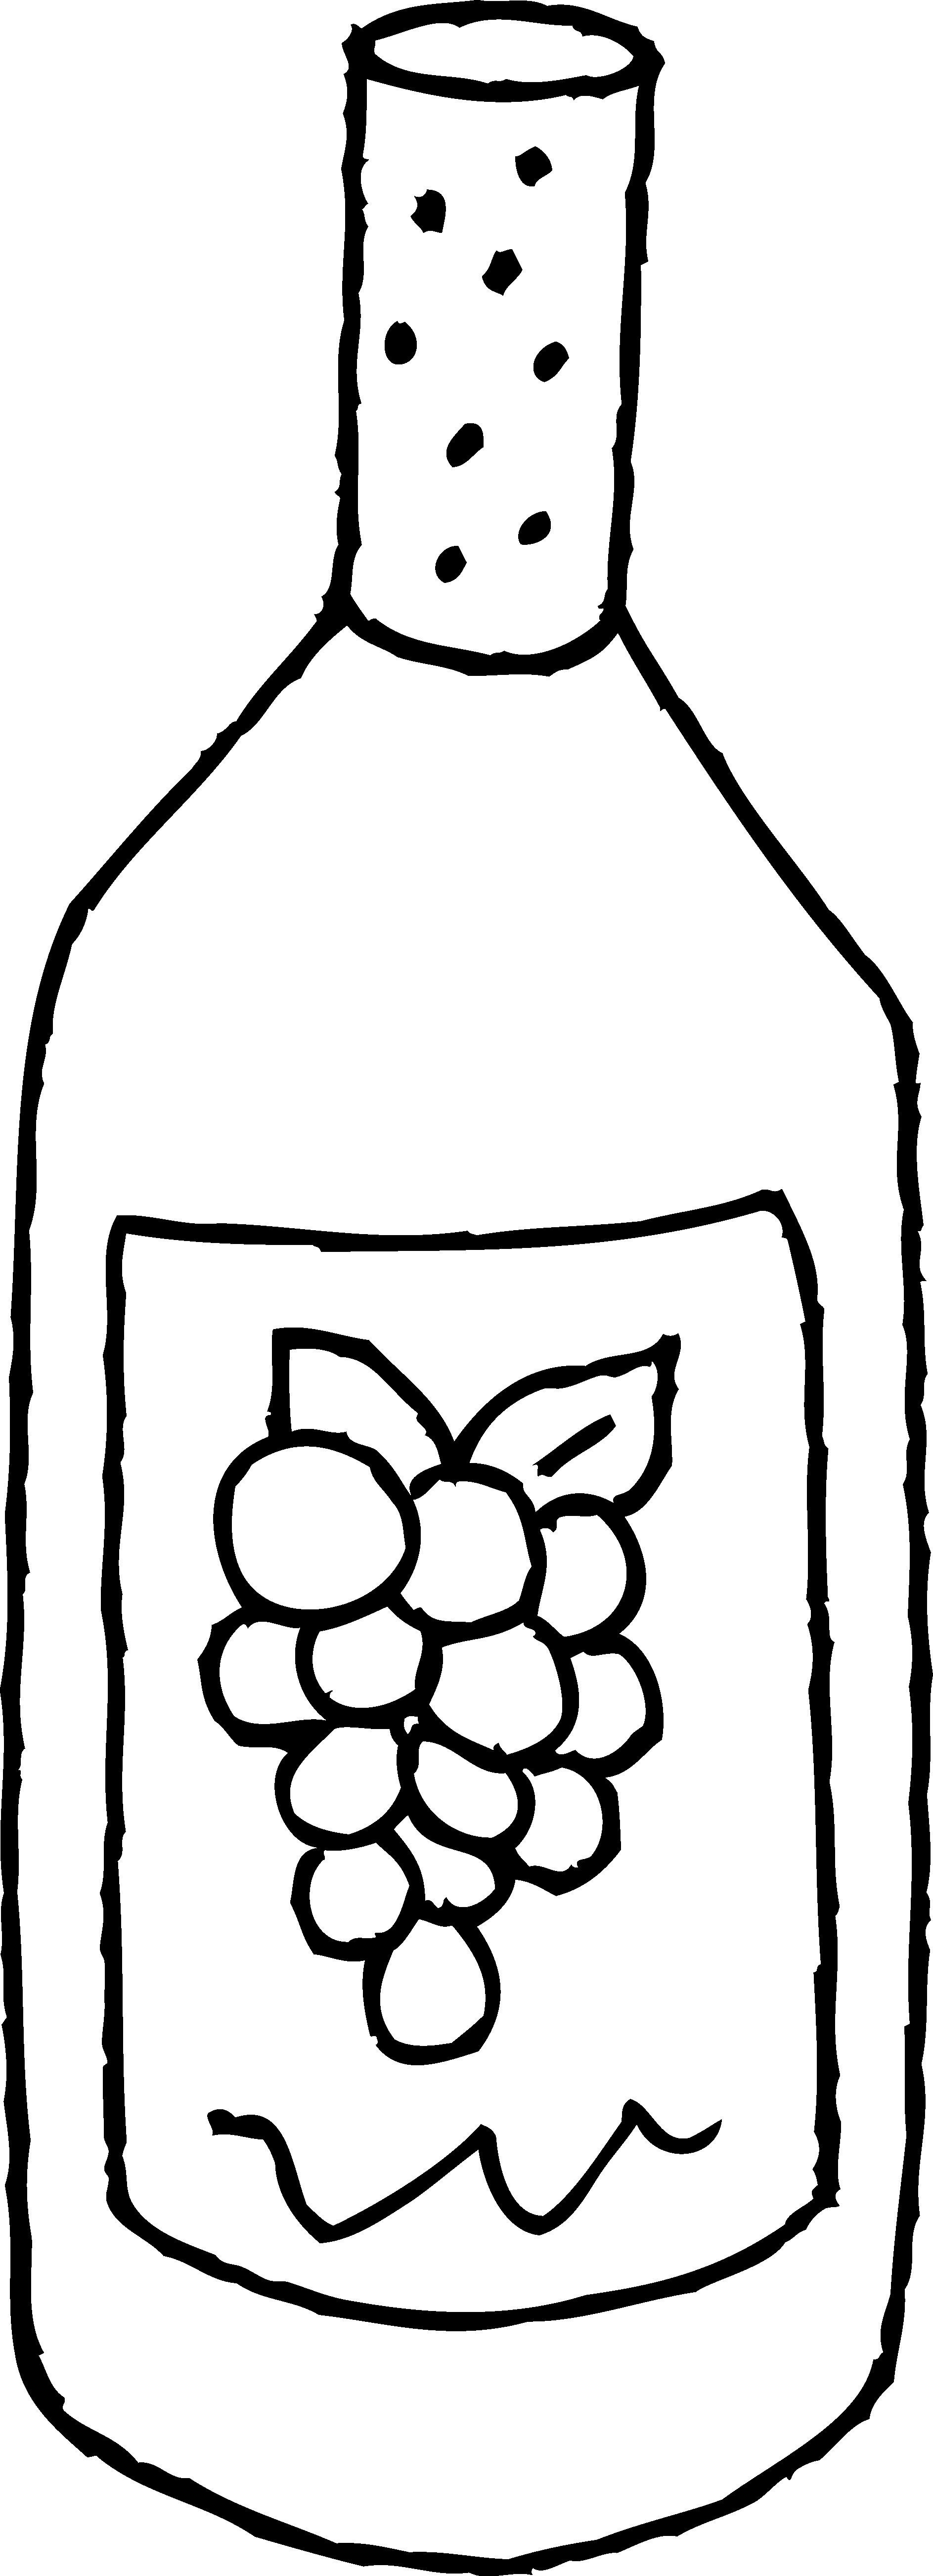 wine bottle black and white drawing | Bottle Idea